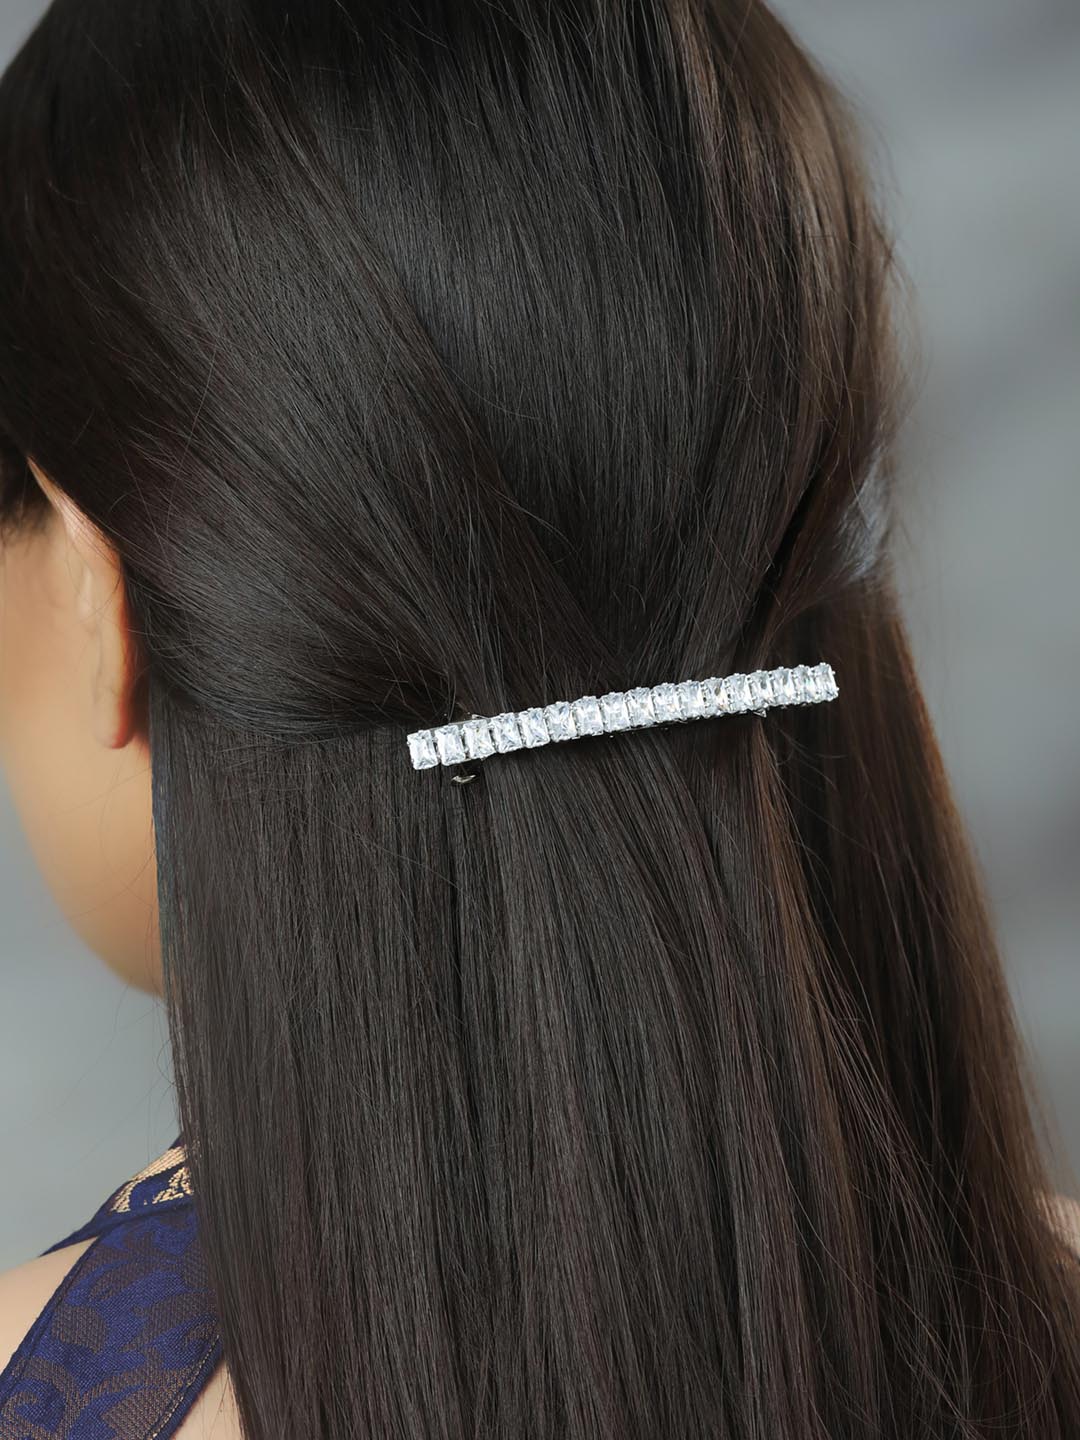 Crystal Pearls Silver Plated Hair Pin